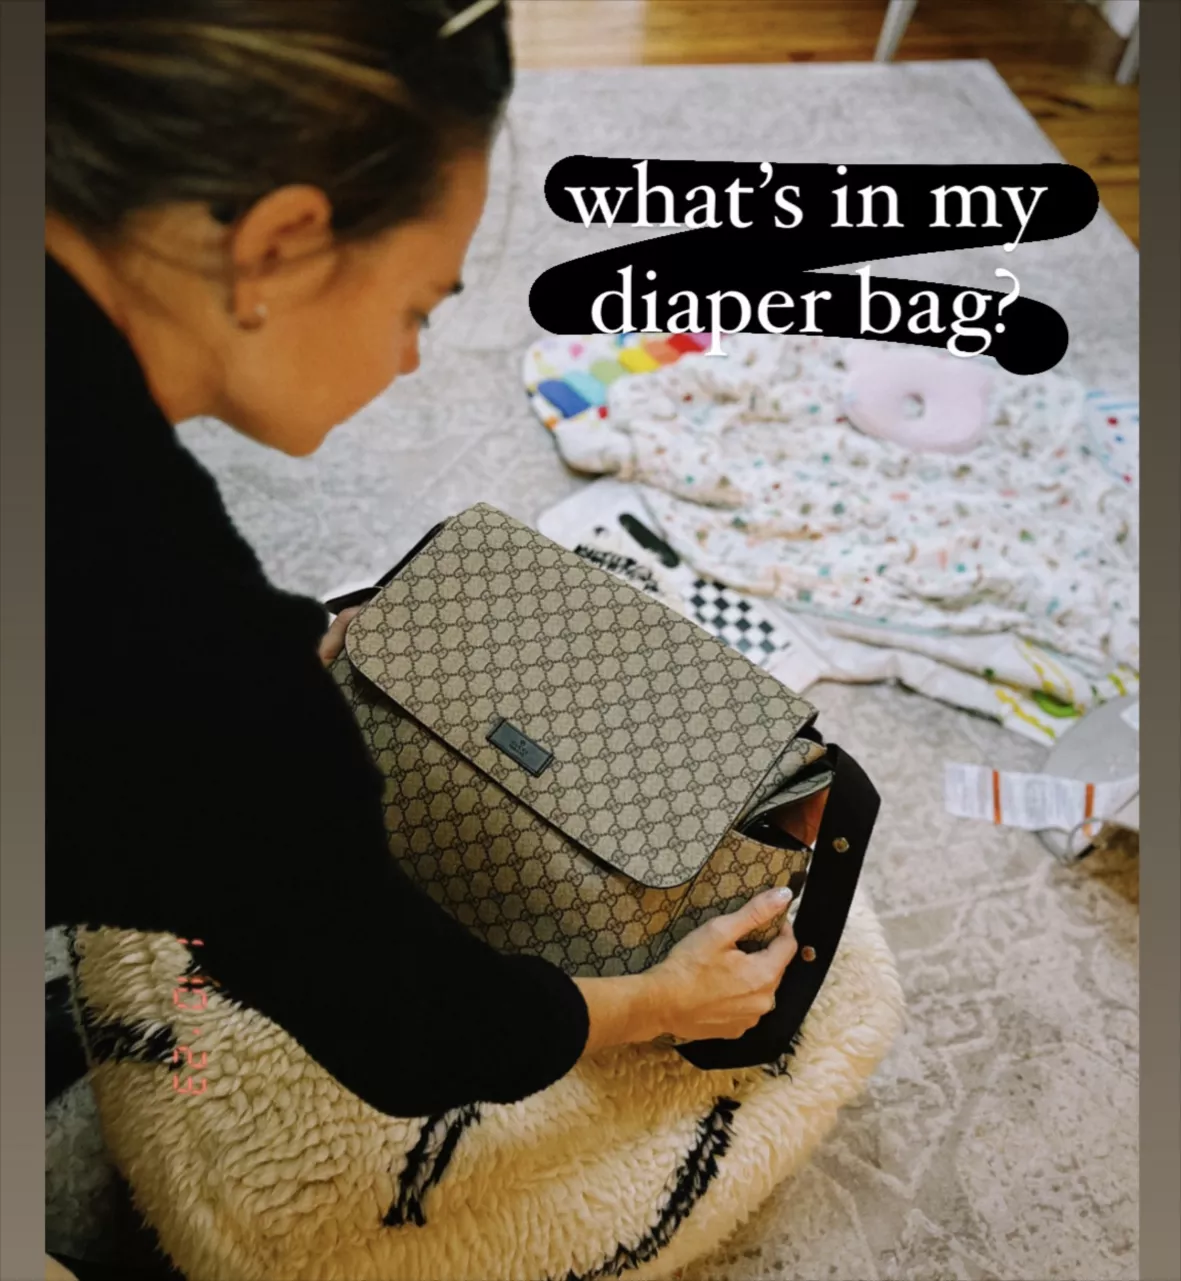 GUCCI Diaper Bag Review 2021  BEST LUXURY DESIGNER BABY BAGS